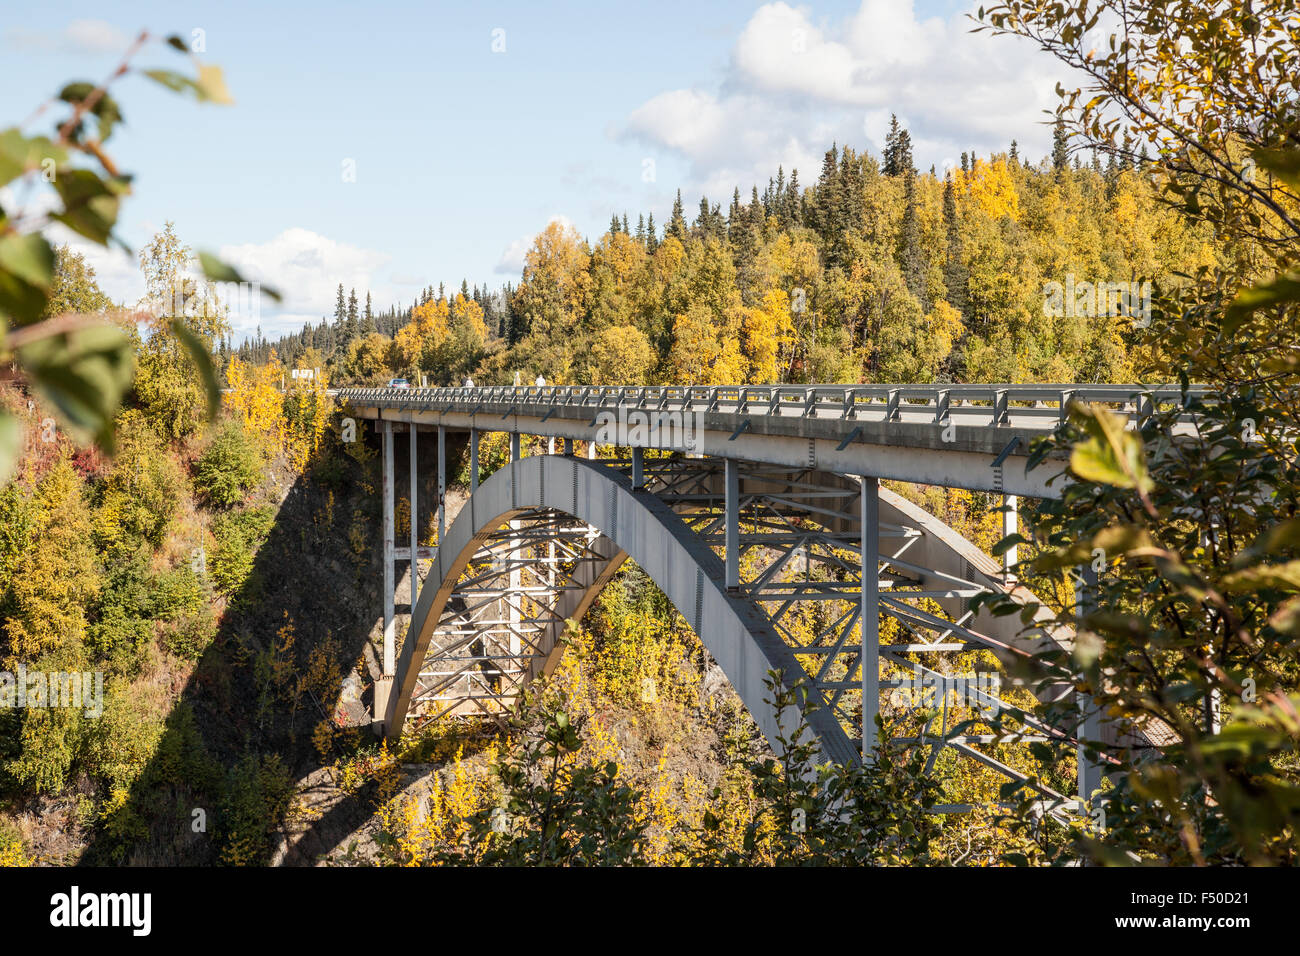 Hurrikan-Gulch-Brücke am George Parks Highway in Alaska. Stockfoto